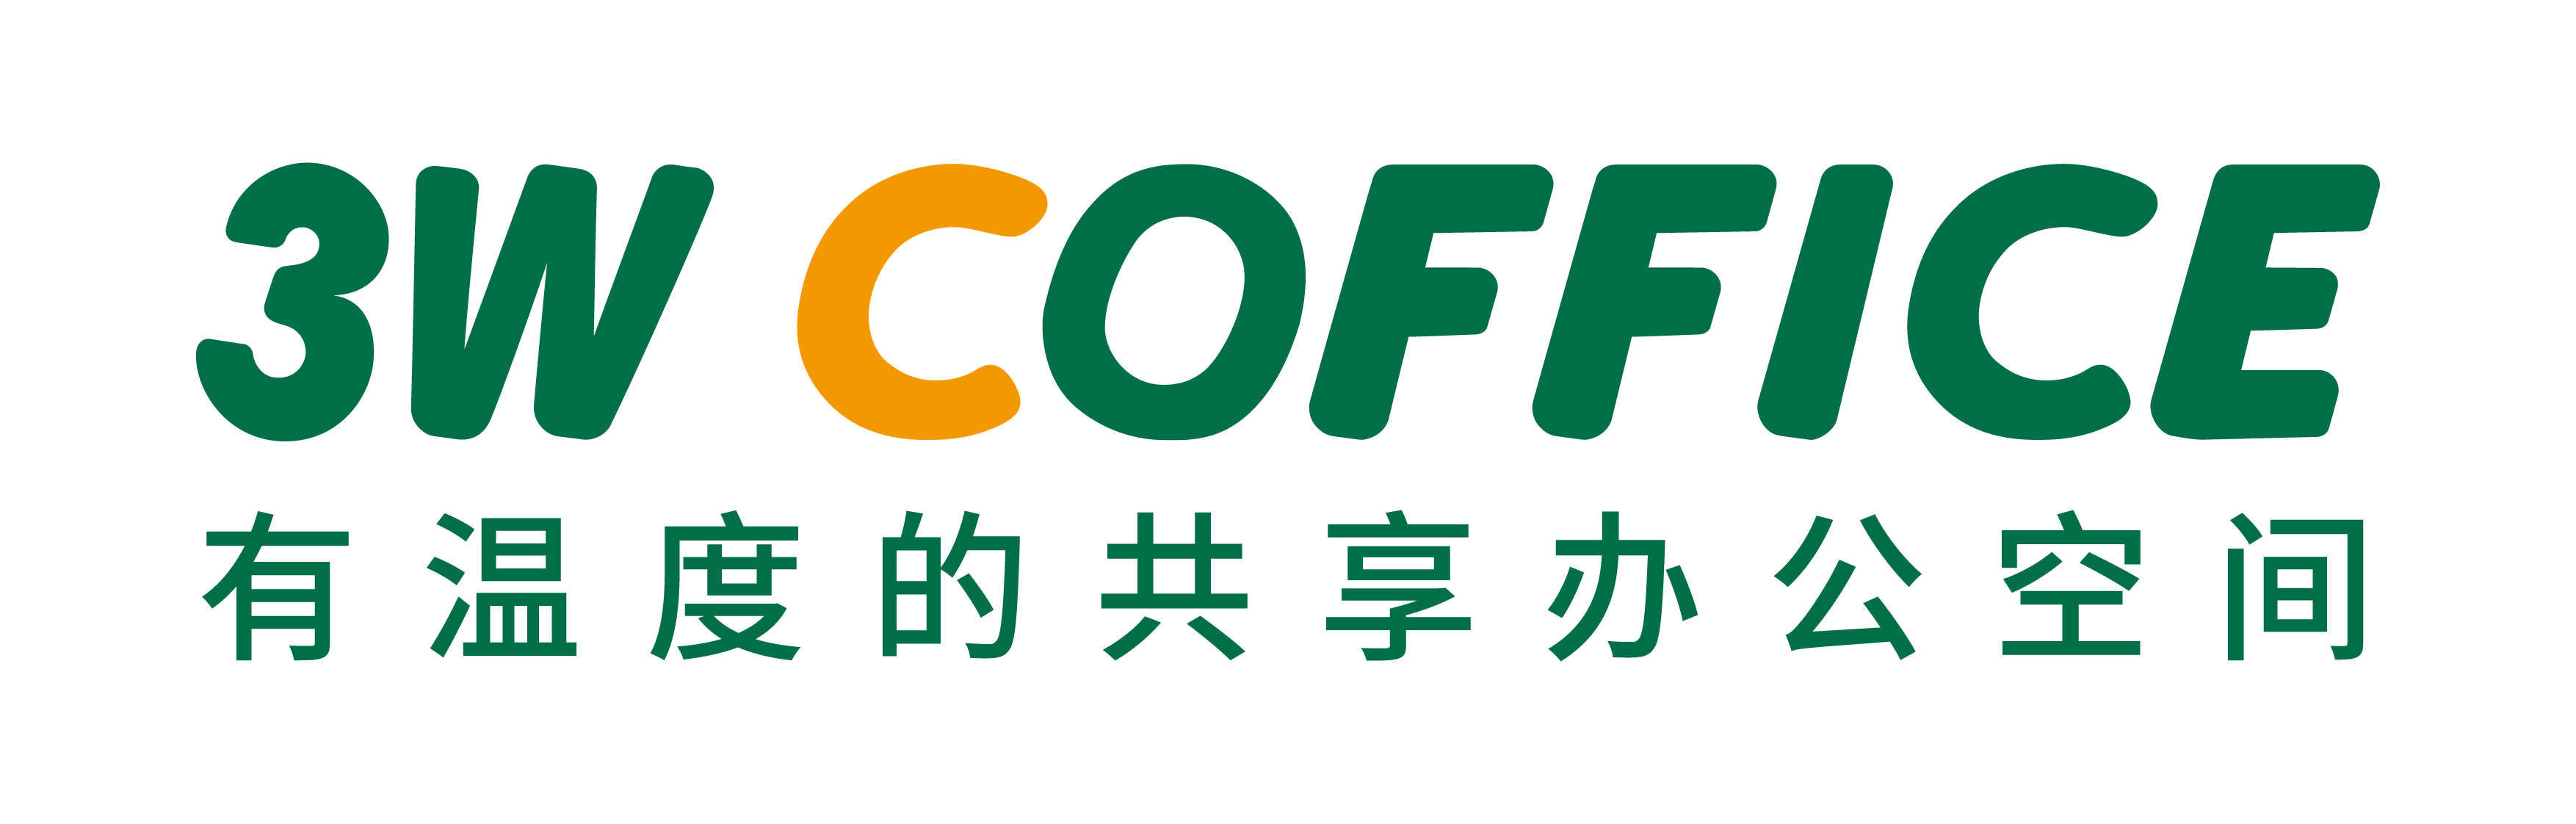 3W COFFICE logo和slogan-01.png